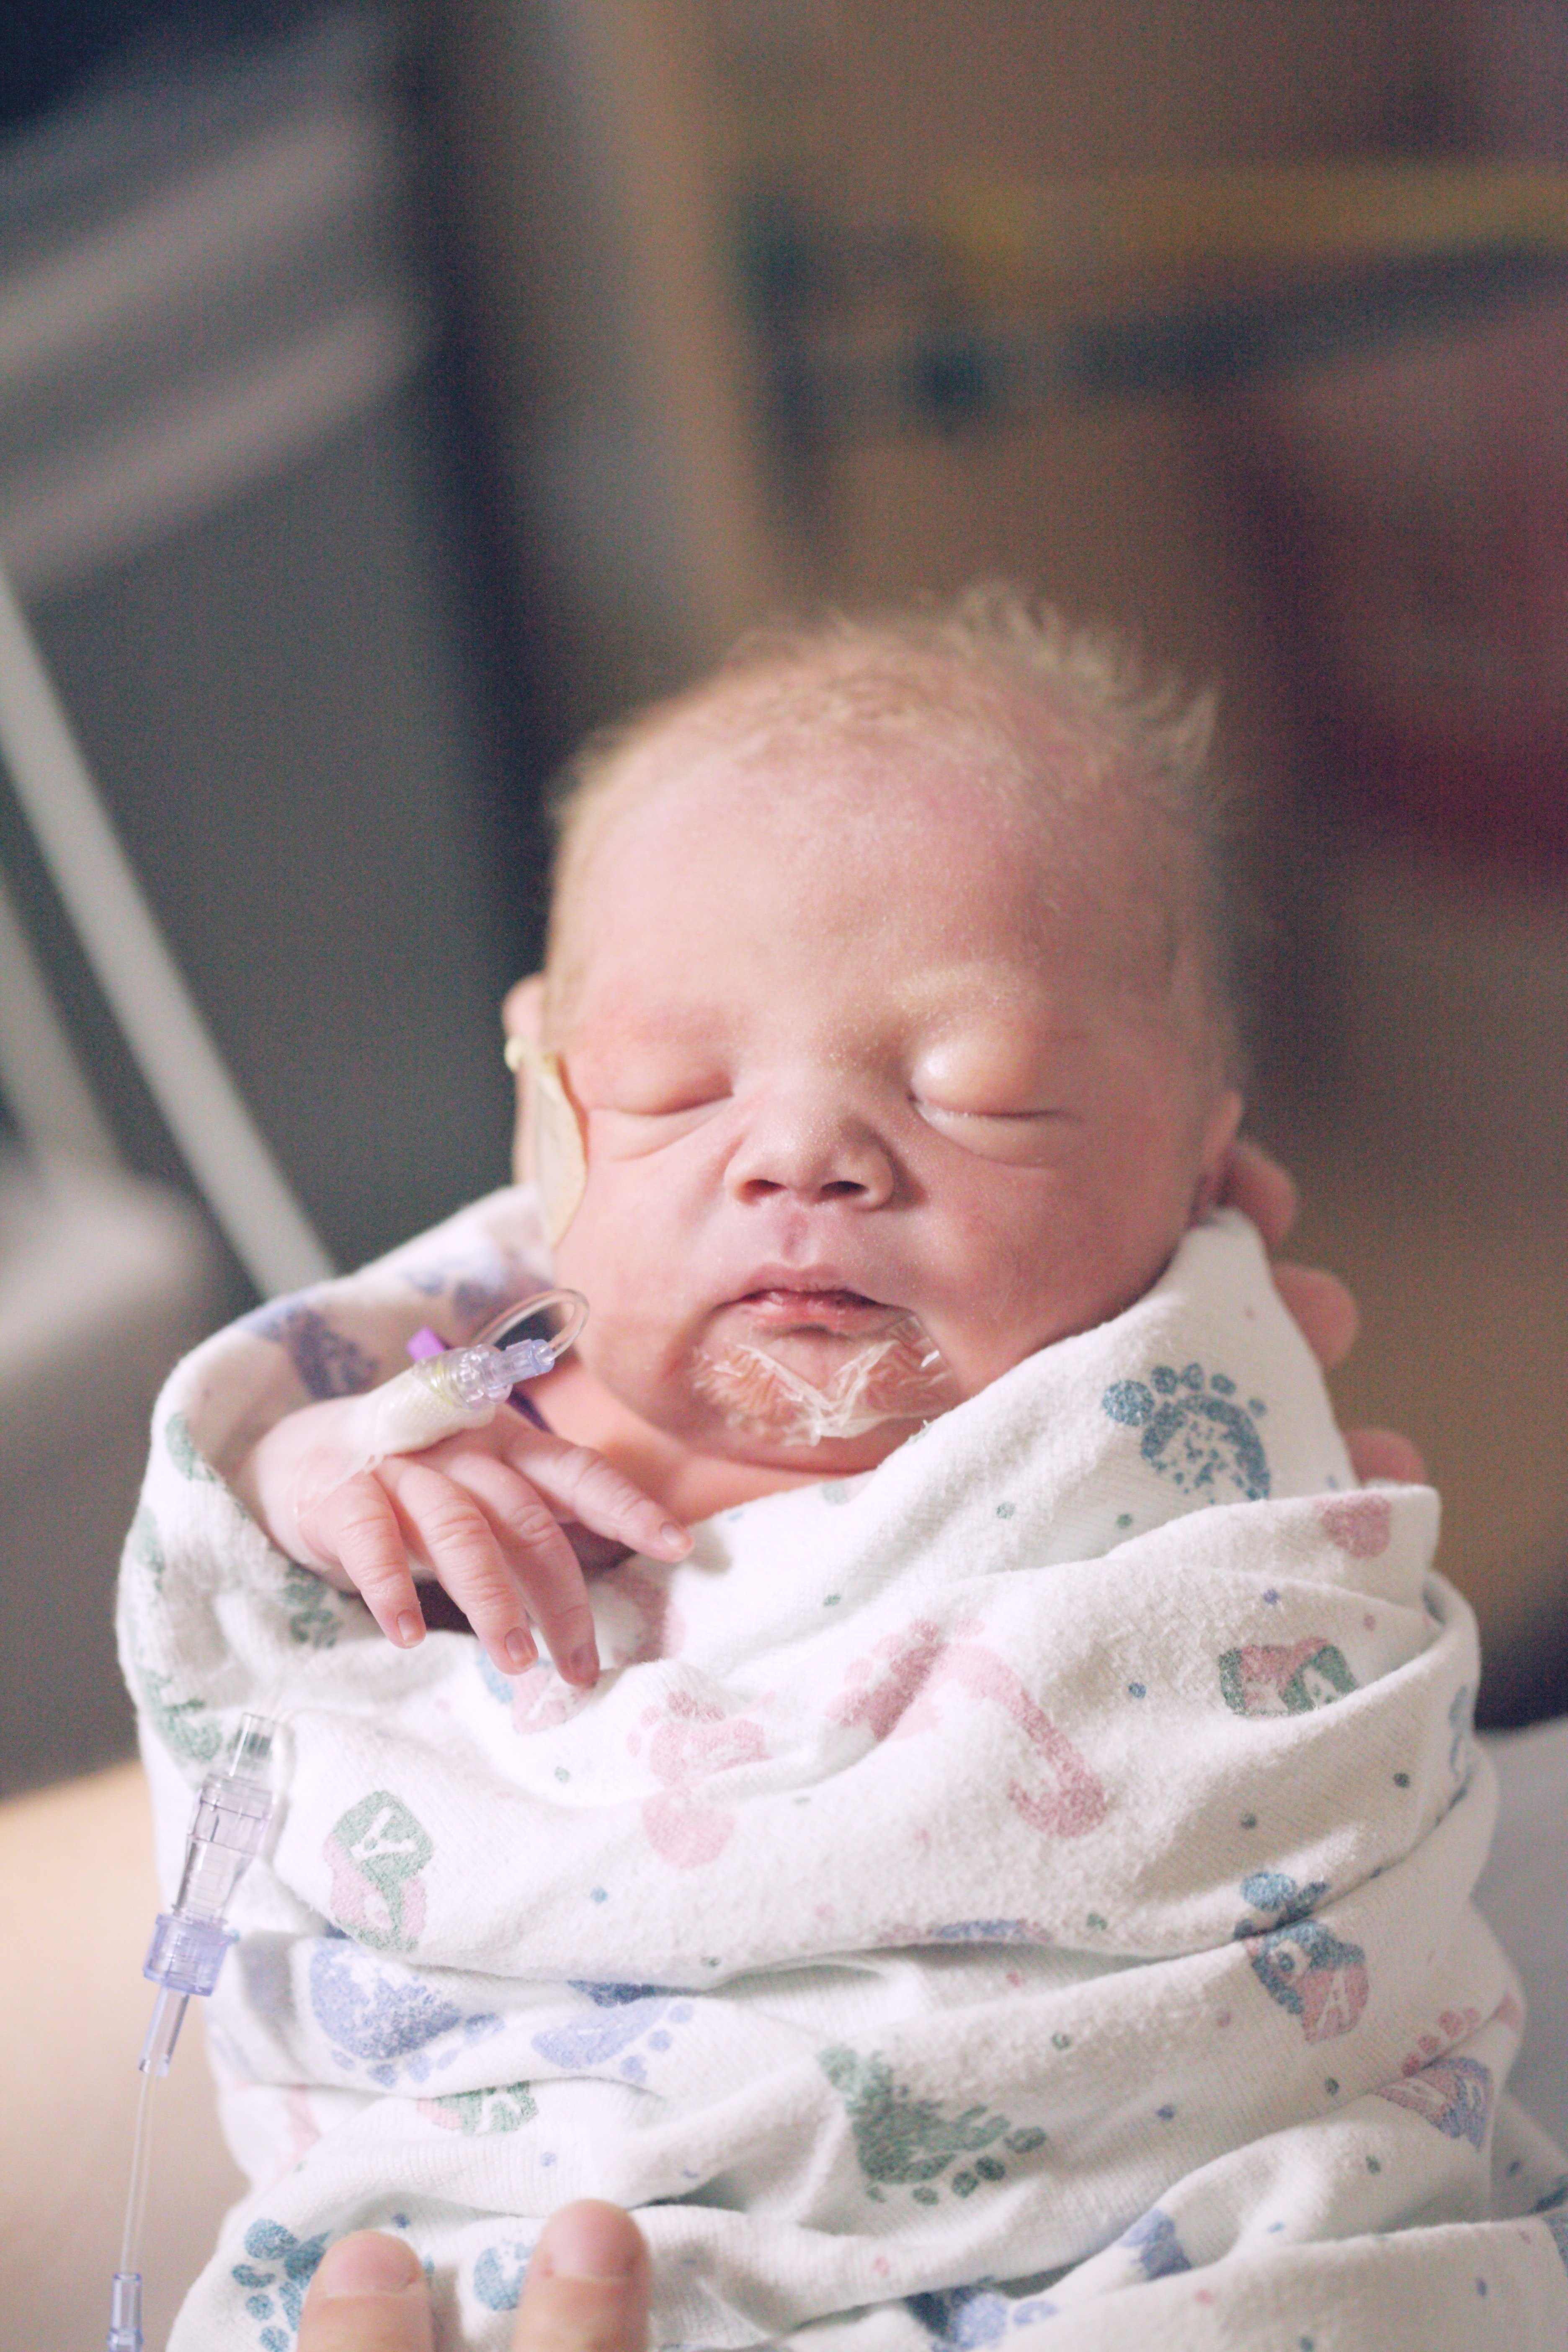 A newborn baby | Source: Unsplash.com